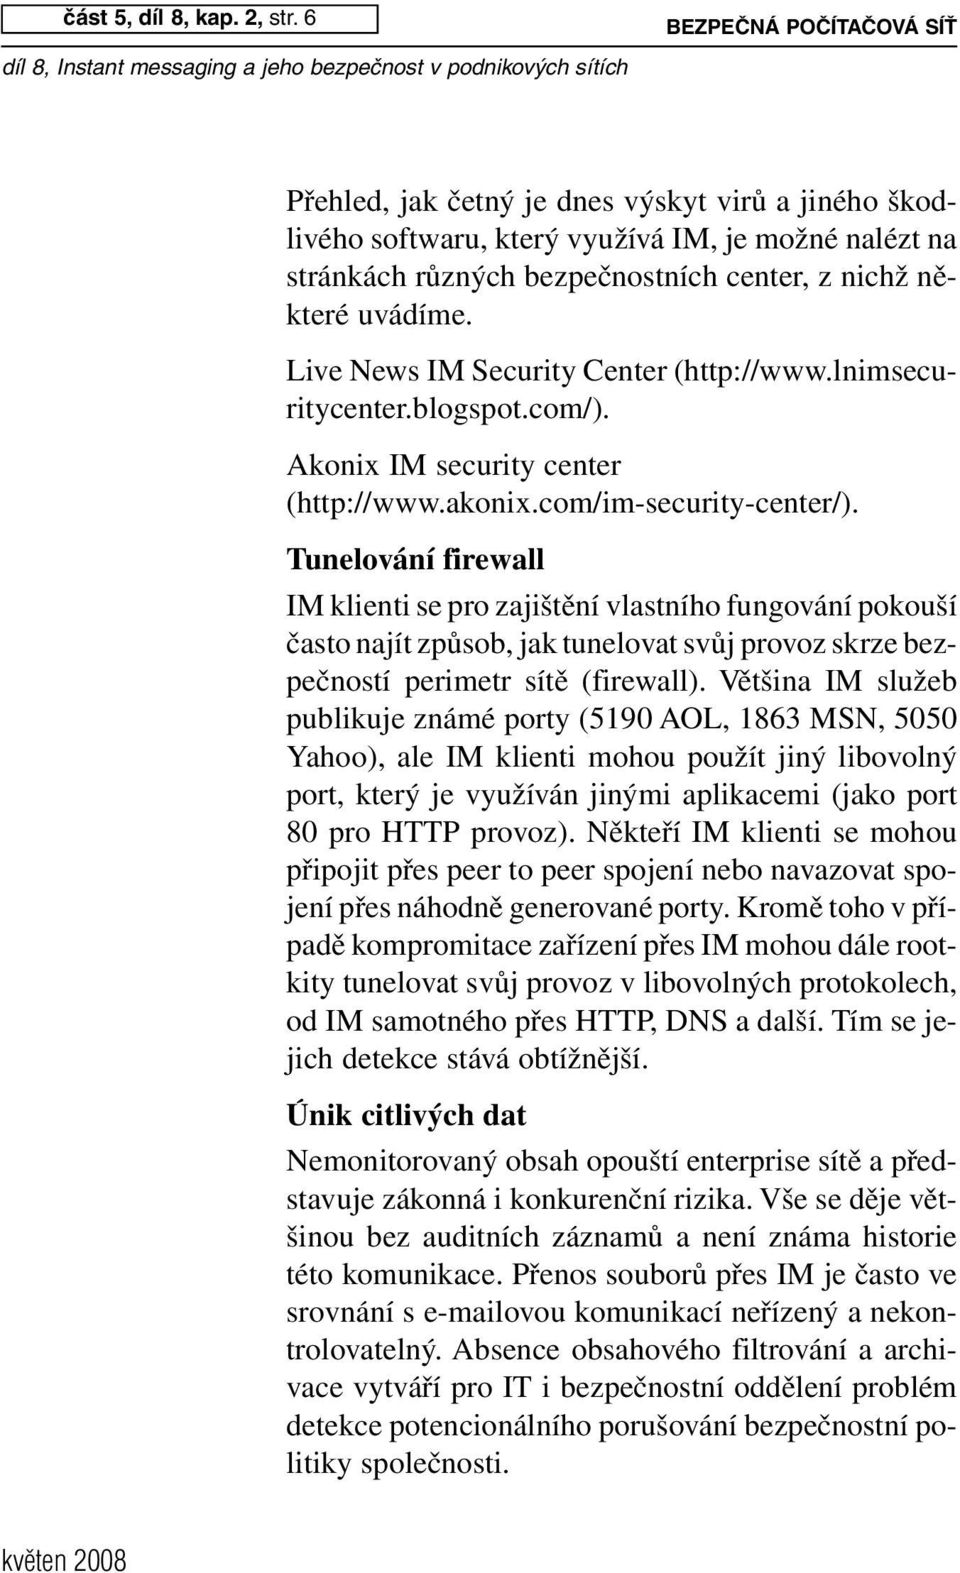 Live News IM Security Center (http://www.lnimsecuritycenter.blogspot.com/). Akonix IM security center (http://www.akonix.com/im-security-center/).